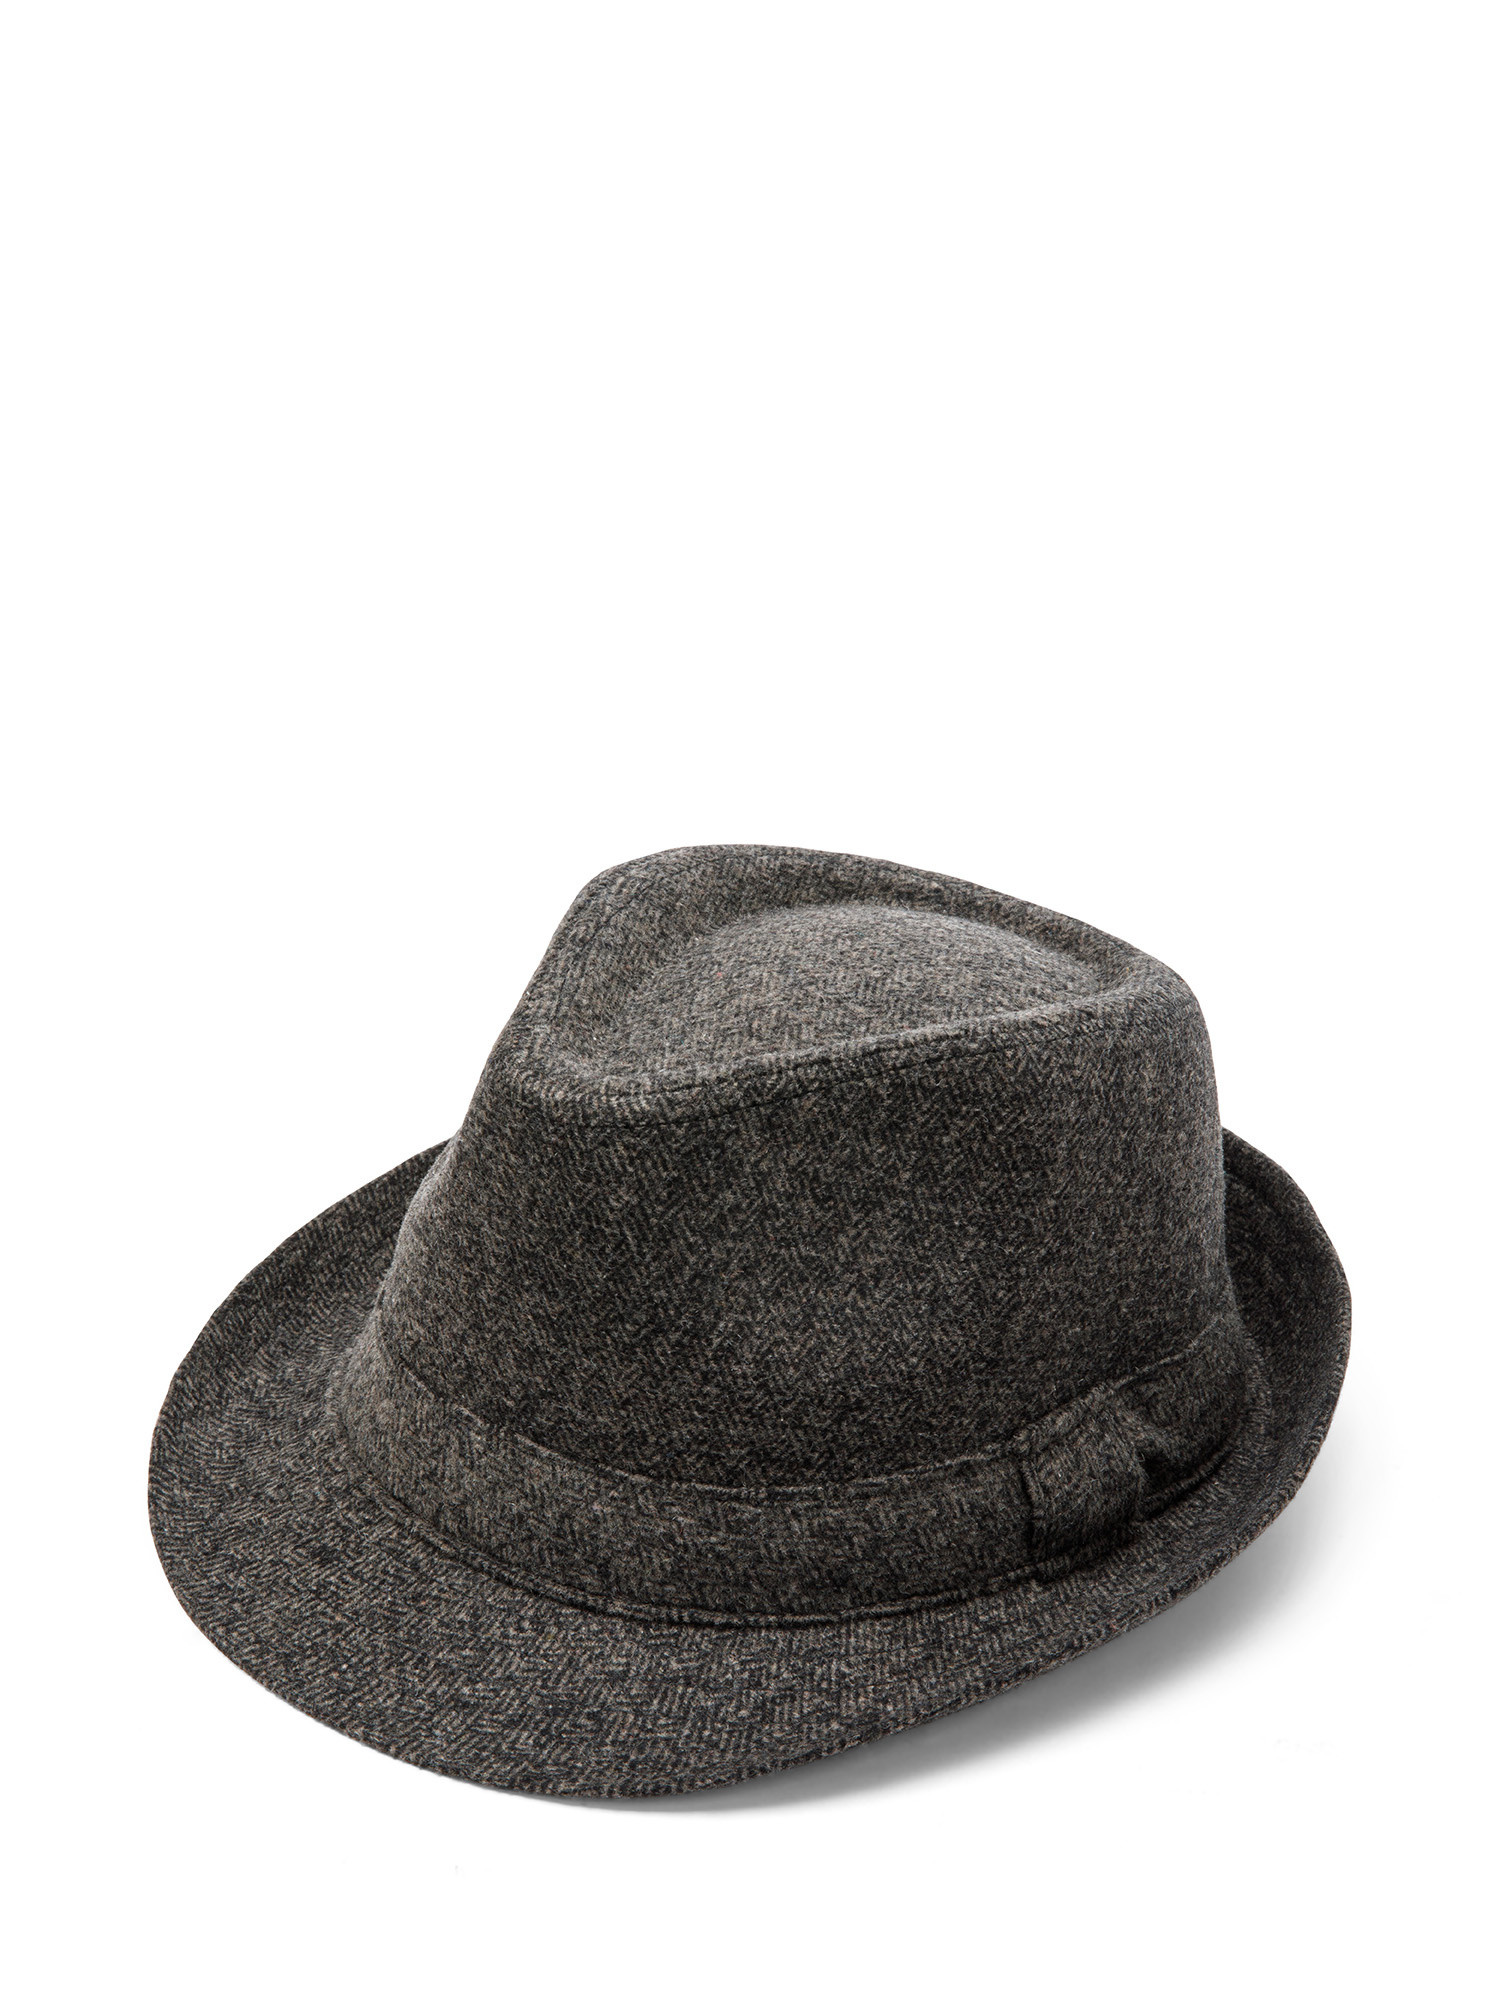 Luca D'Altieri - Barbed alpine hat, Brown, large image number 0